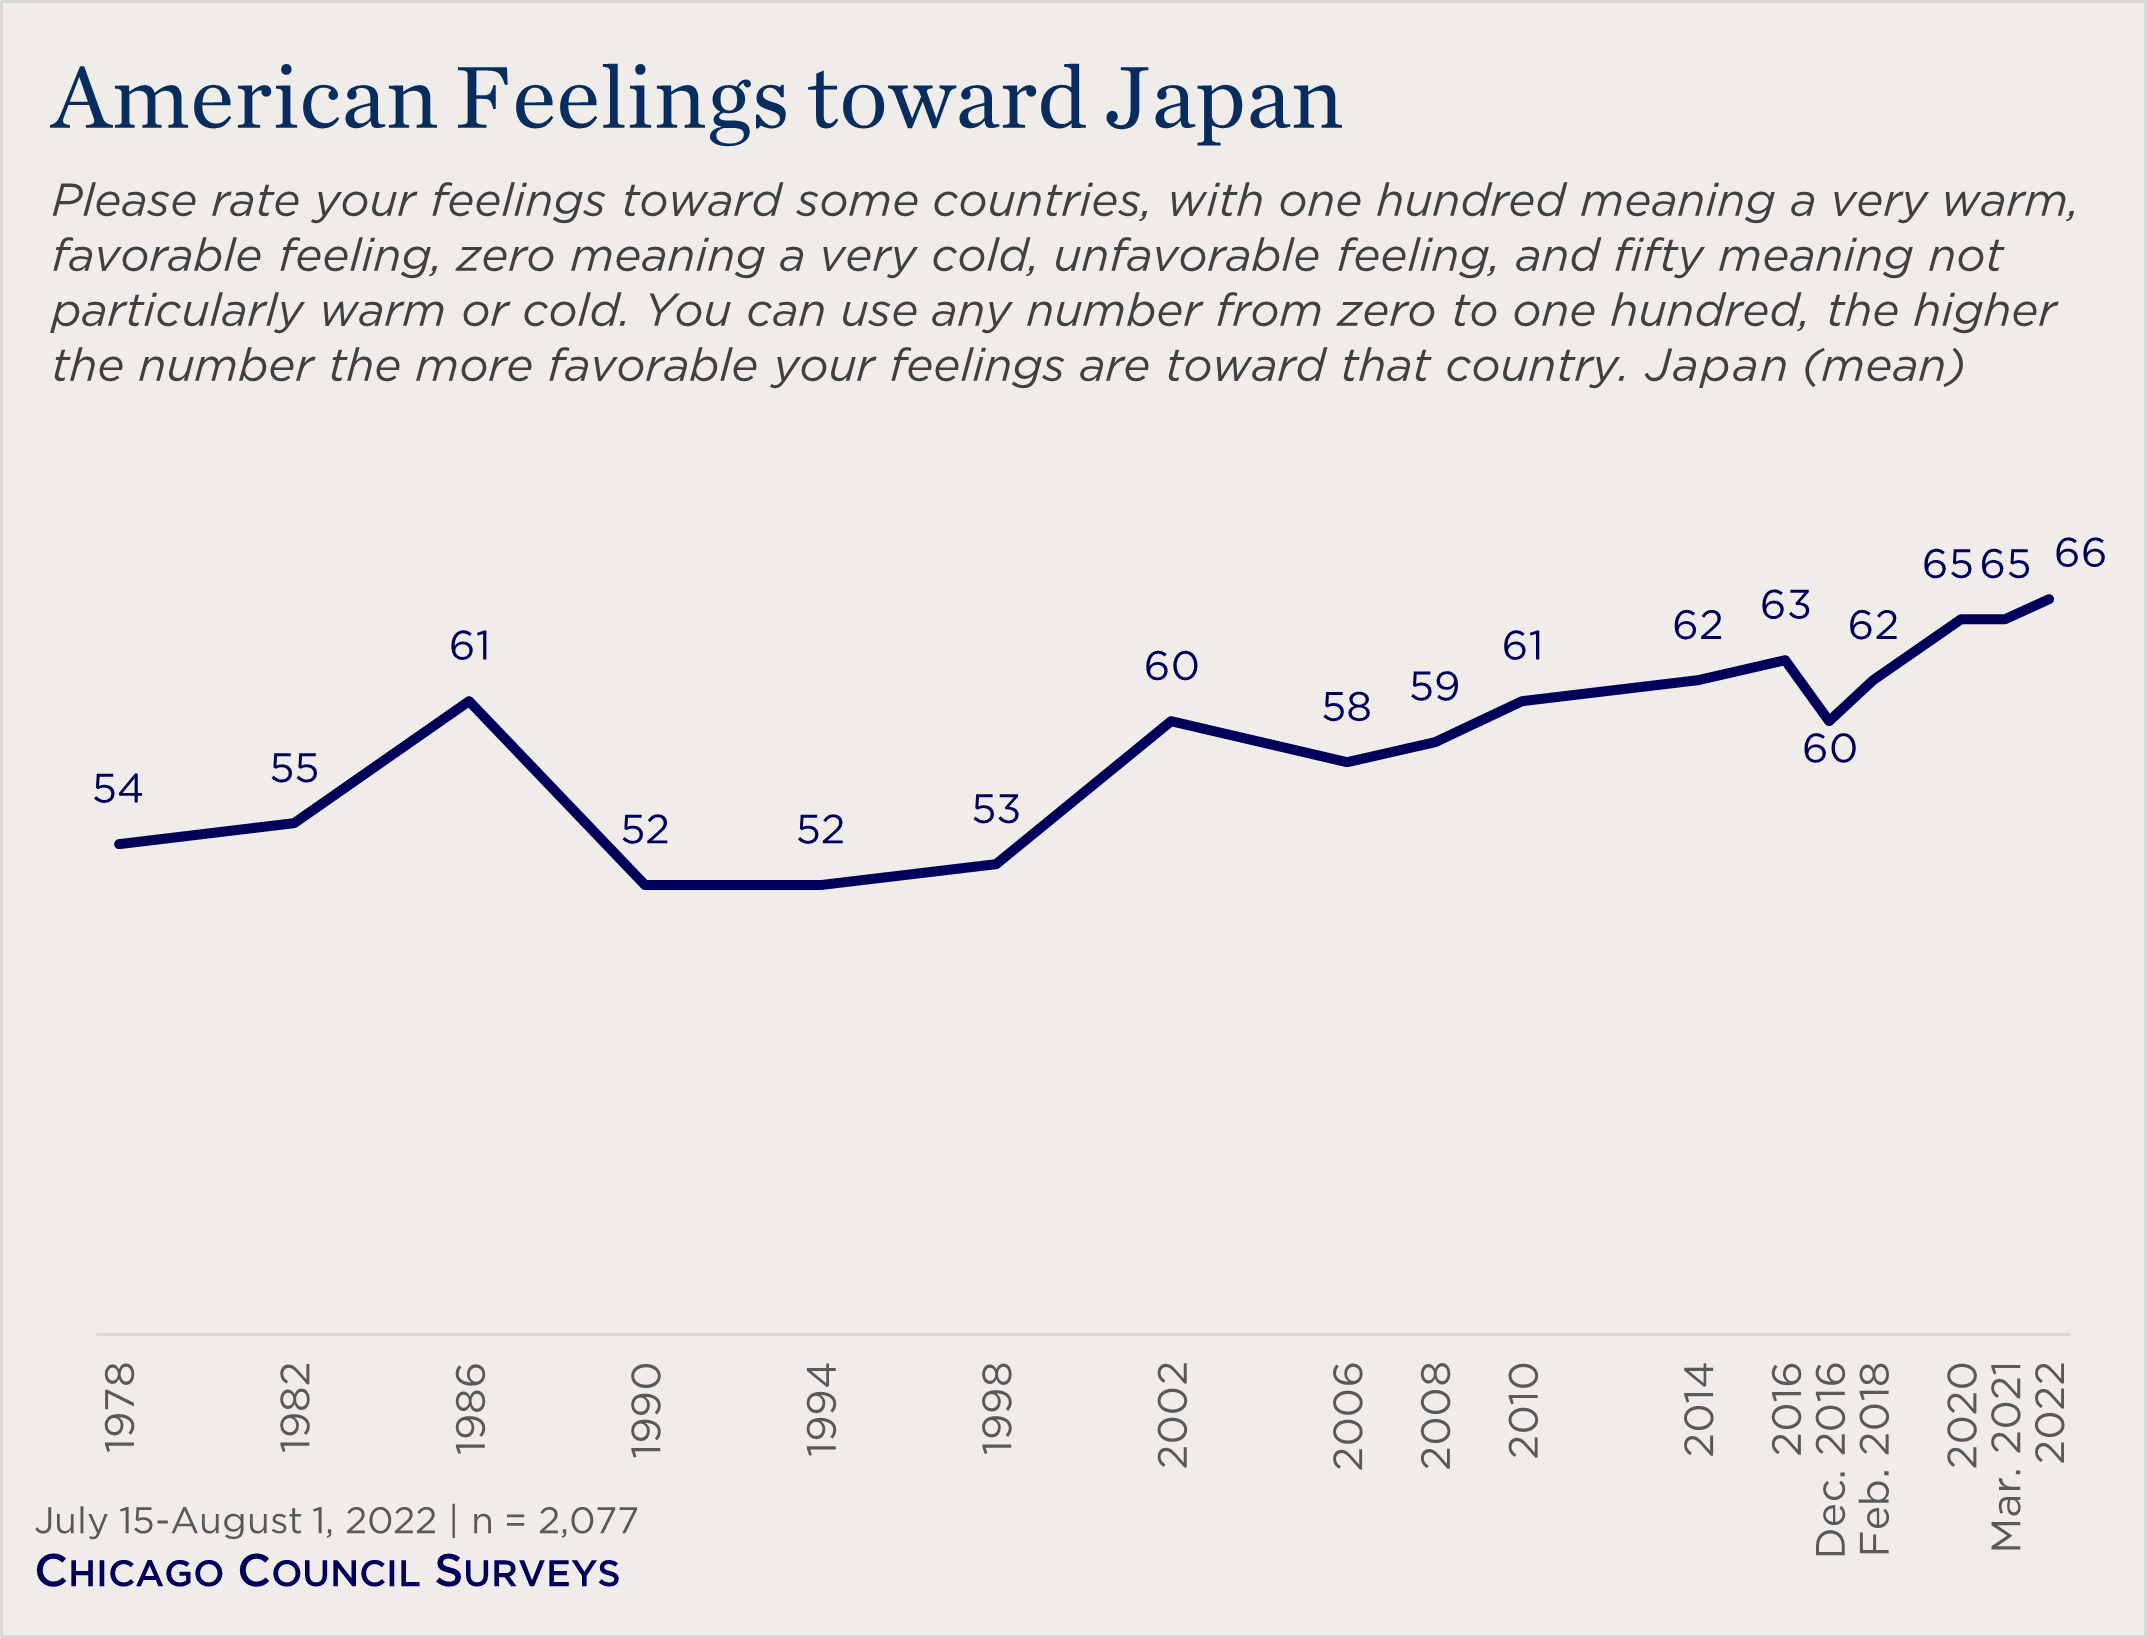 line chart showing American feelings toward Japan over time